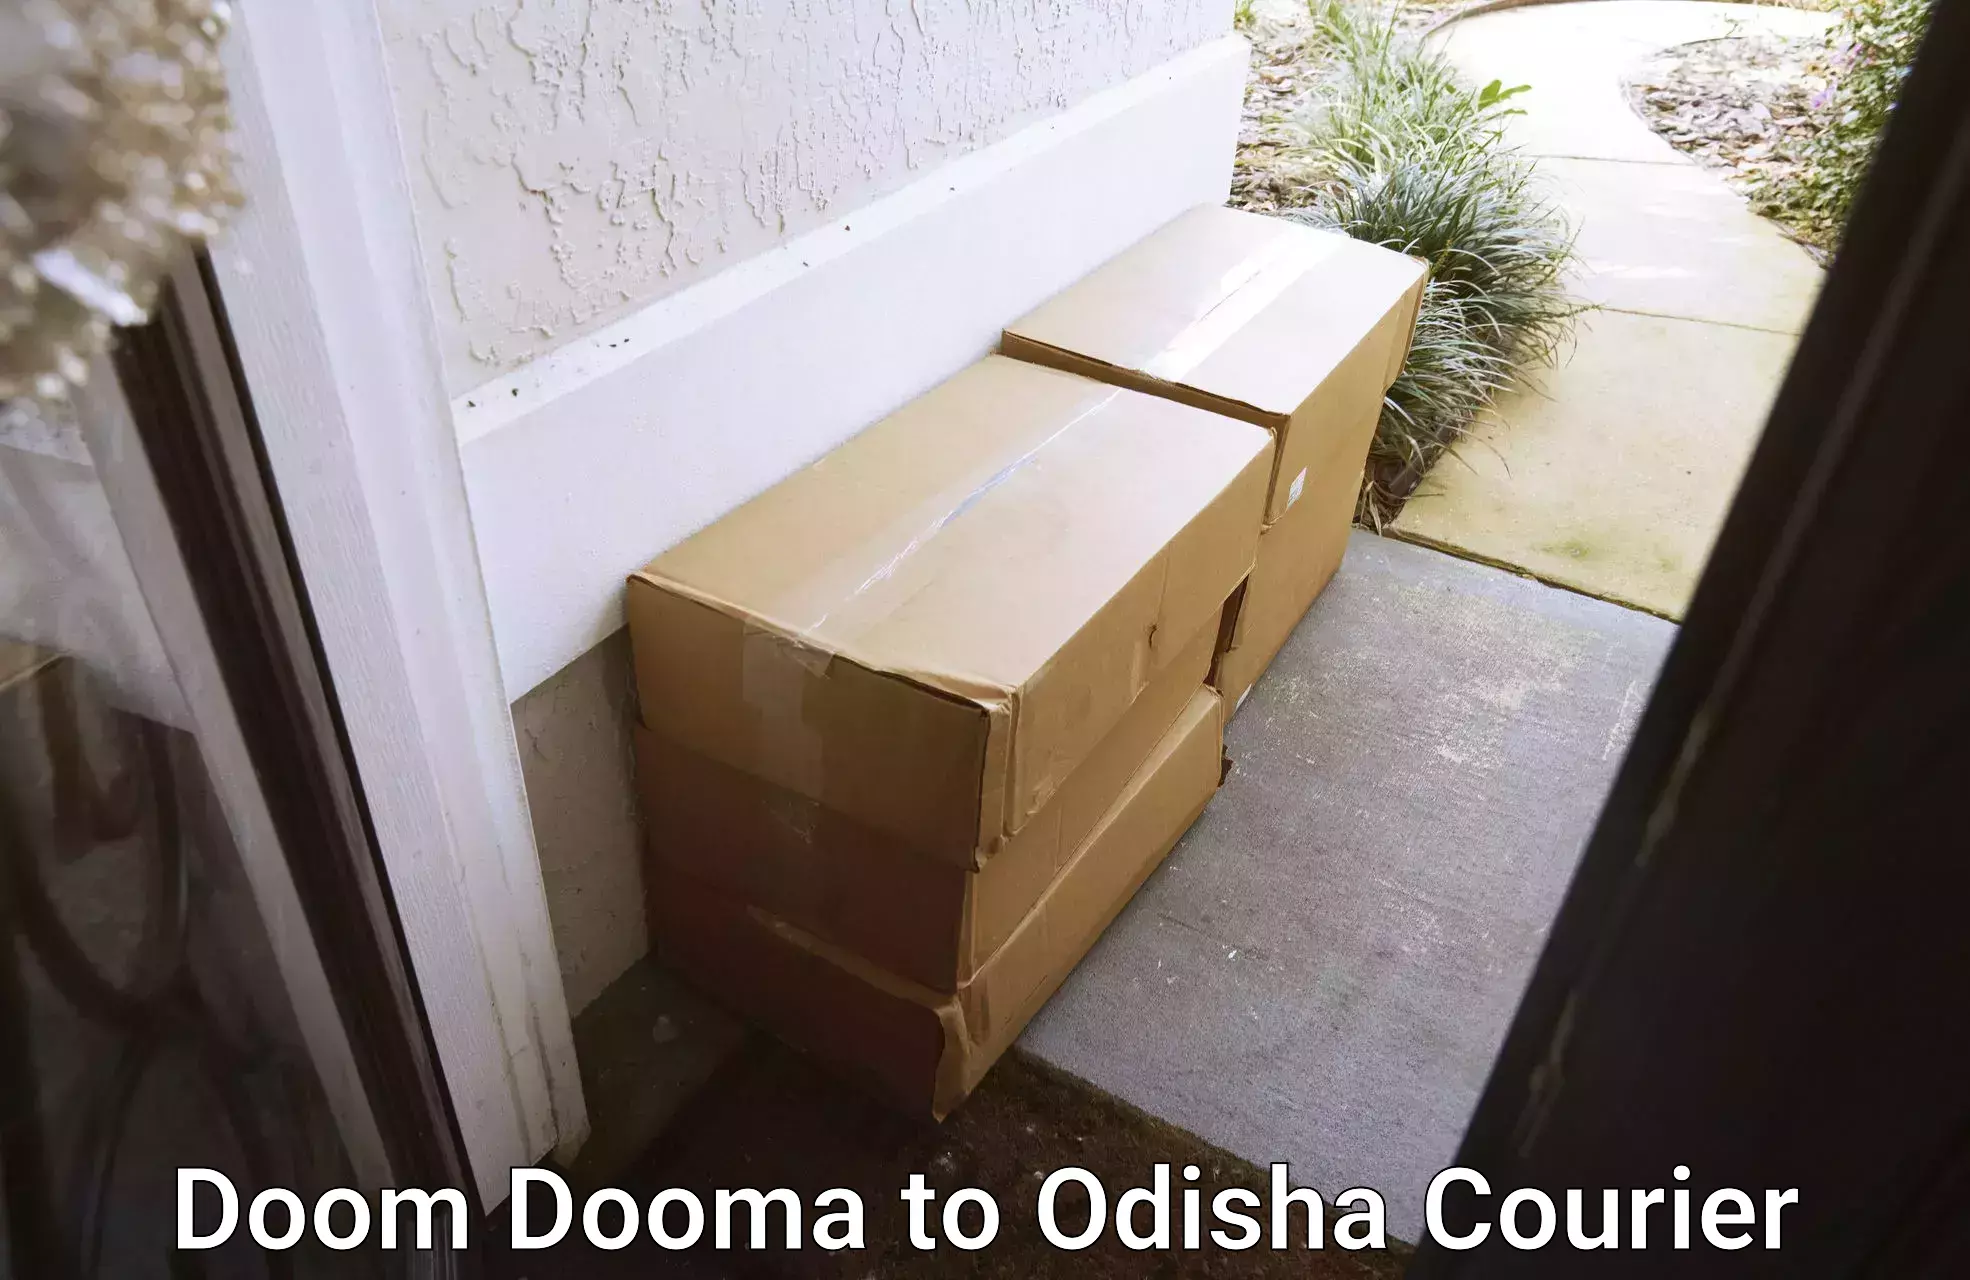 Express logistics providers Doom Dooma to Joda